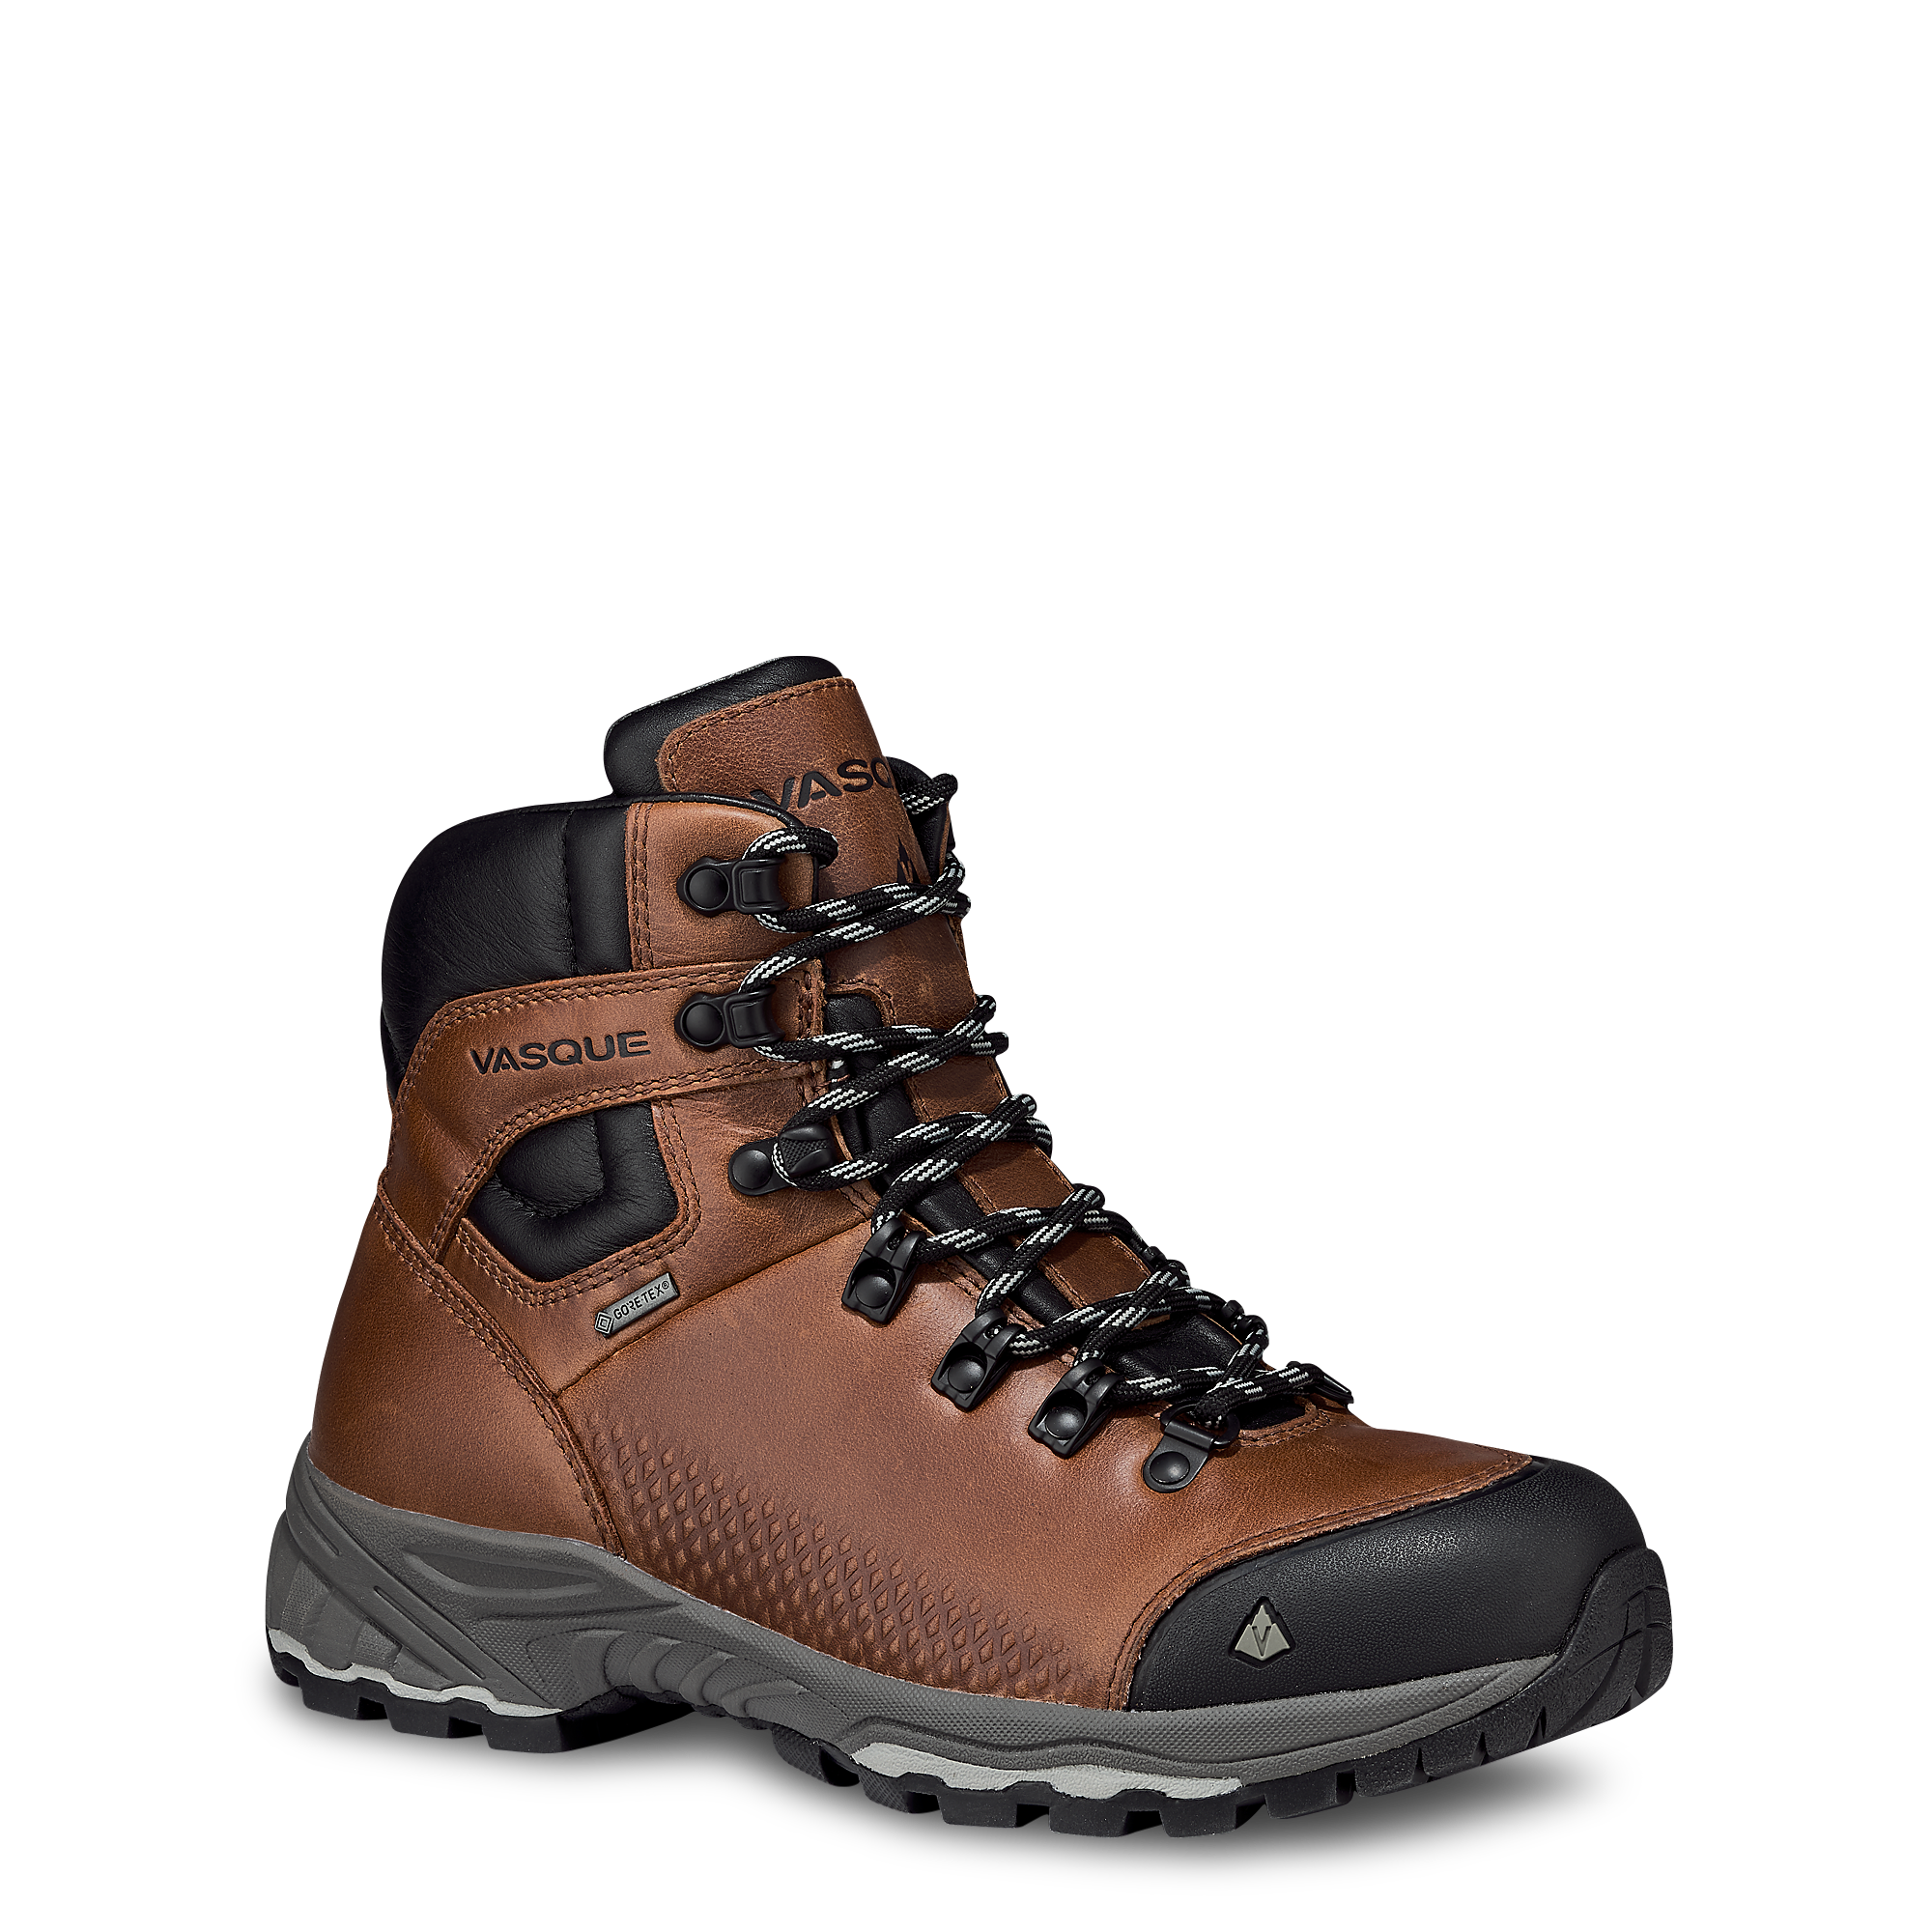 Vasque St. Elias FG GTX Waterproof Hiking Boots for Ladies - Cognac - 6M